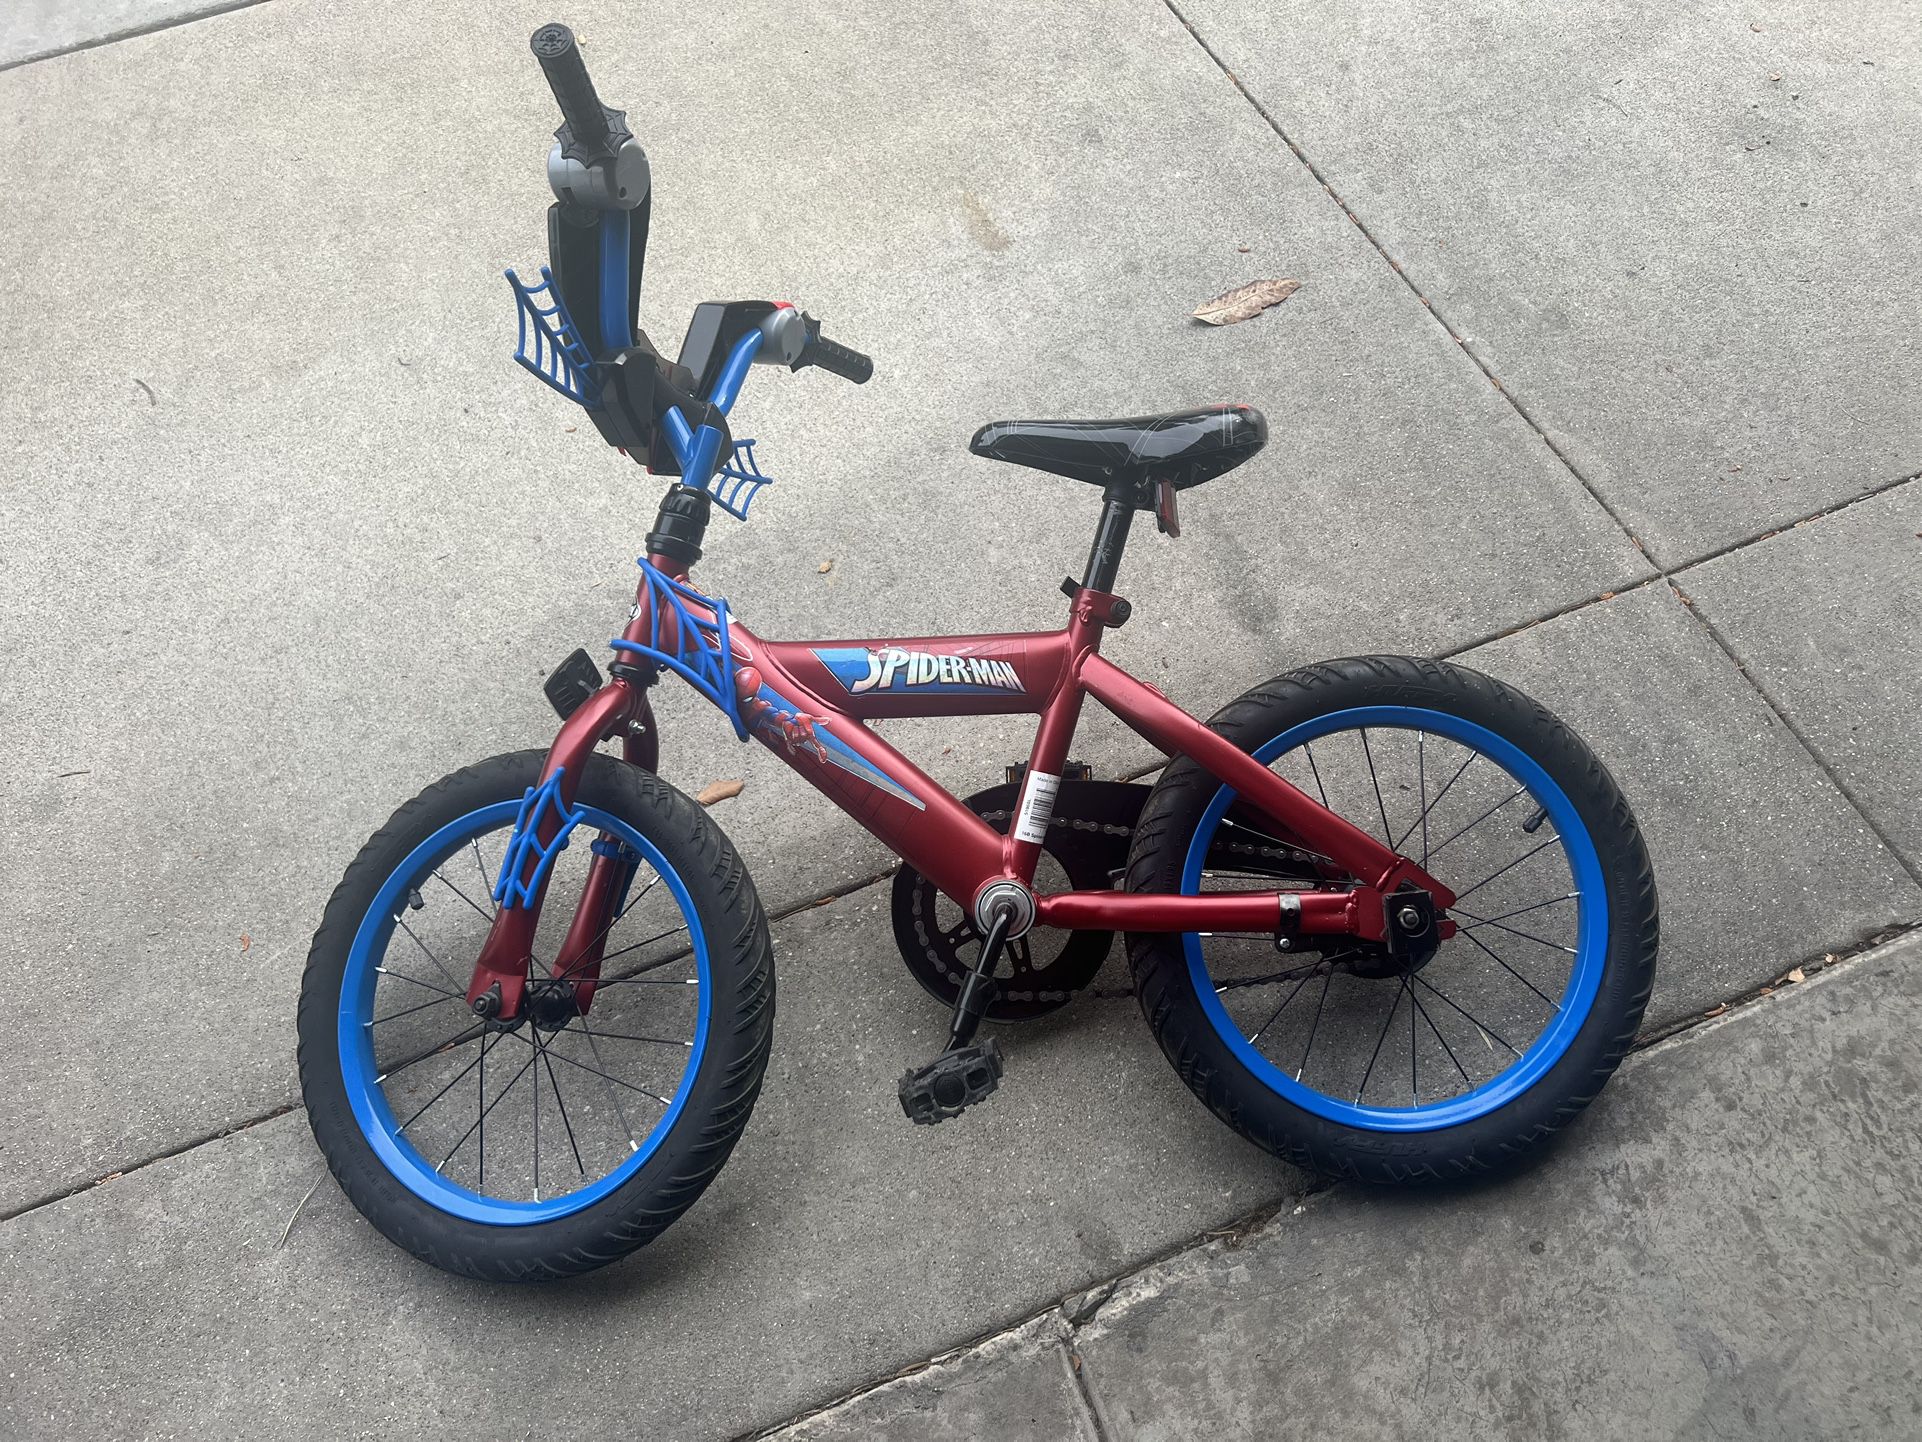 16” Spiderman Kids Bike.  $40